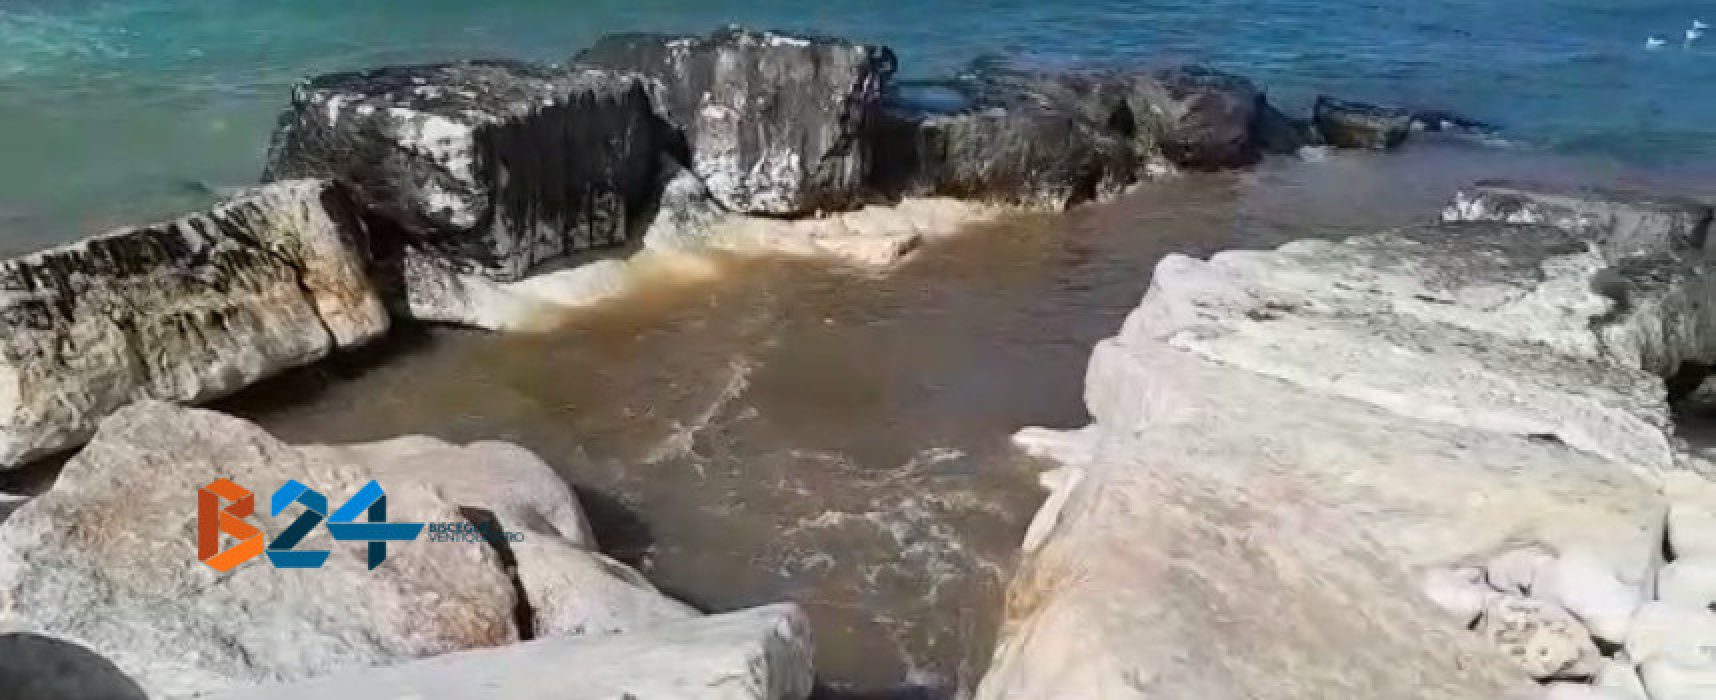 Copioso sversamento acque reflue in zona BiMarmi / VIDEO